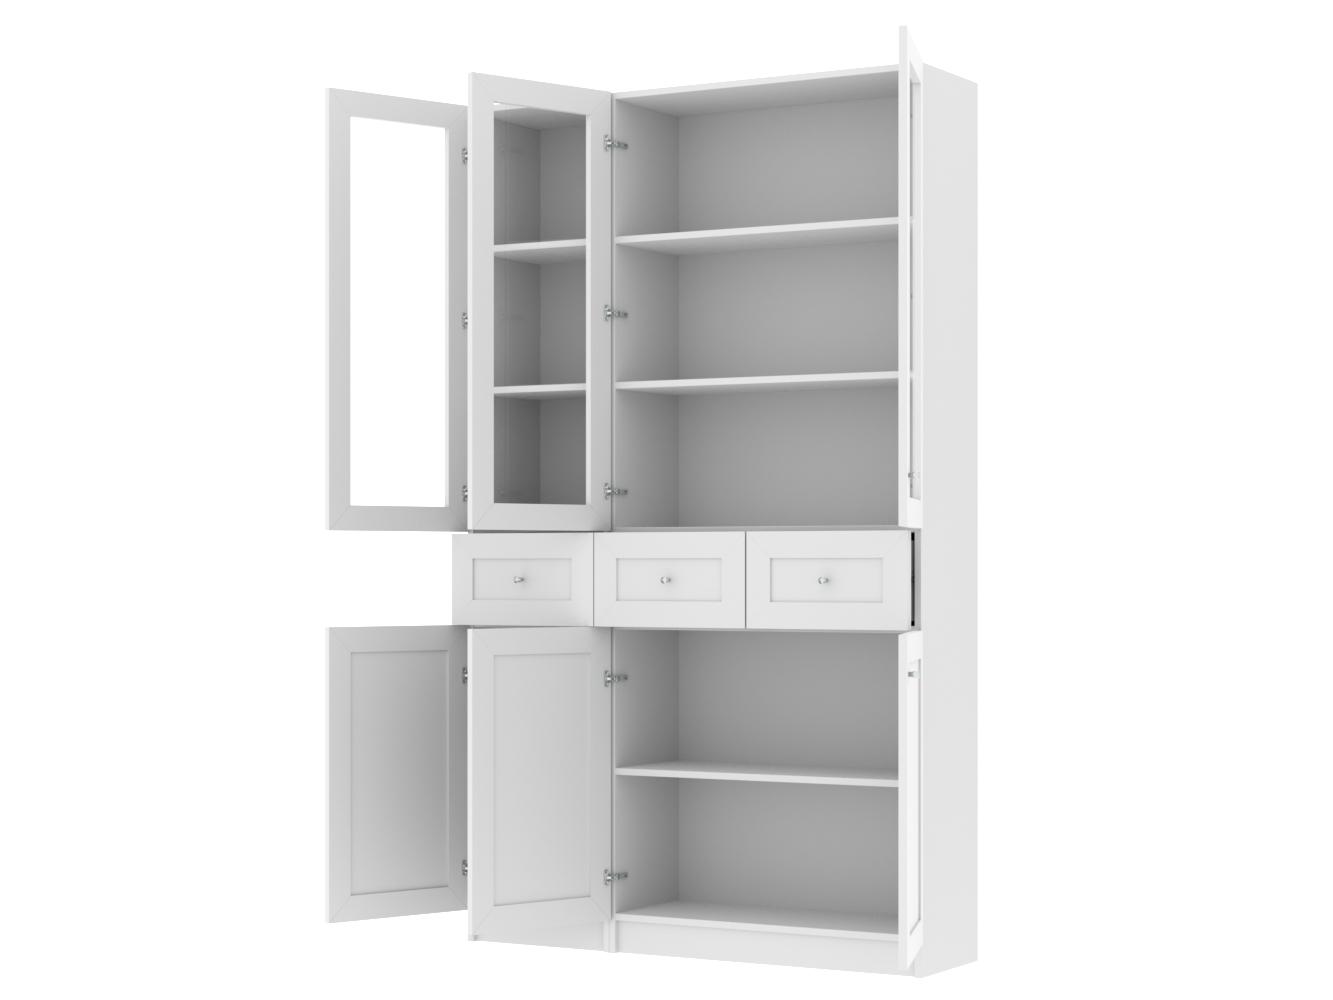 Книжный шкаф Билли 324 white ИКЕА (IKEA) изображение товара